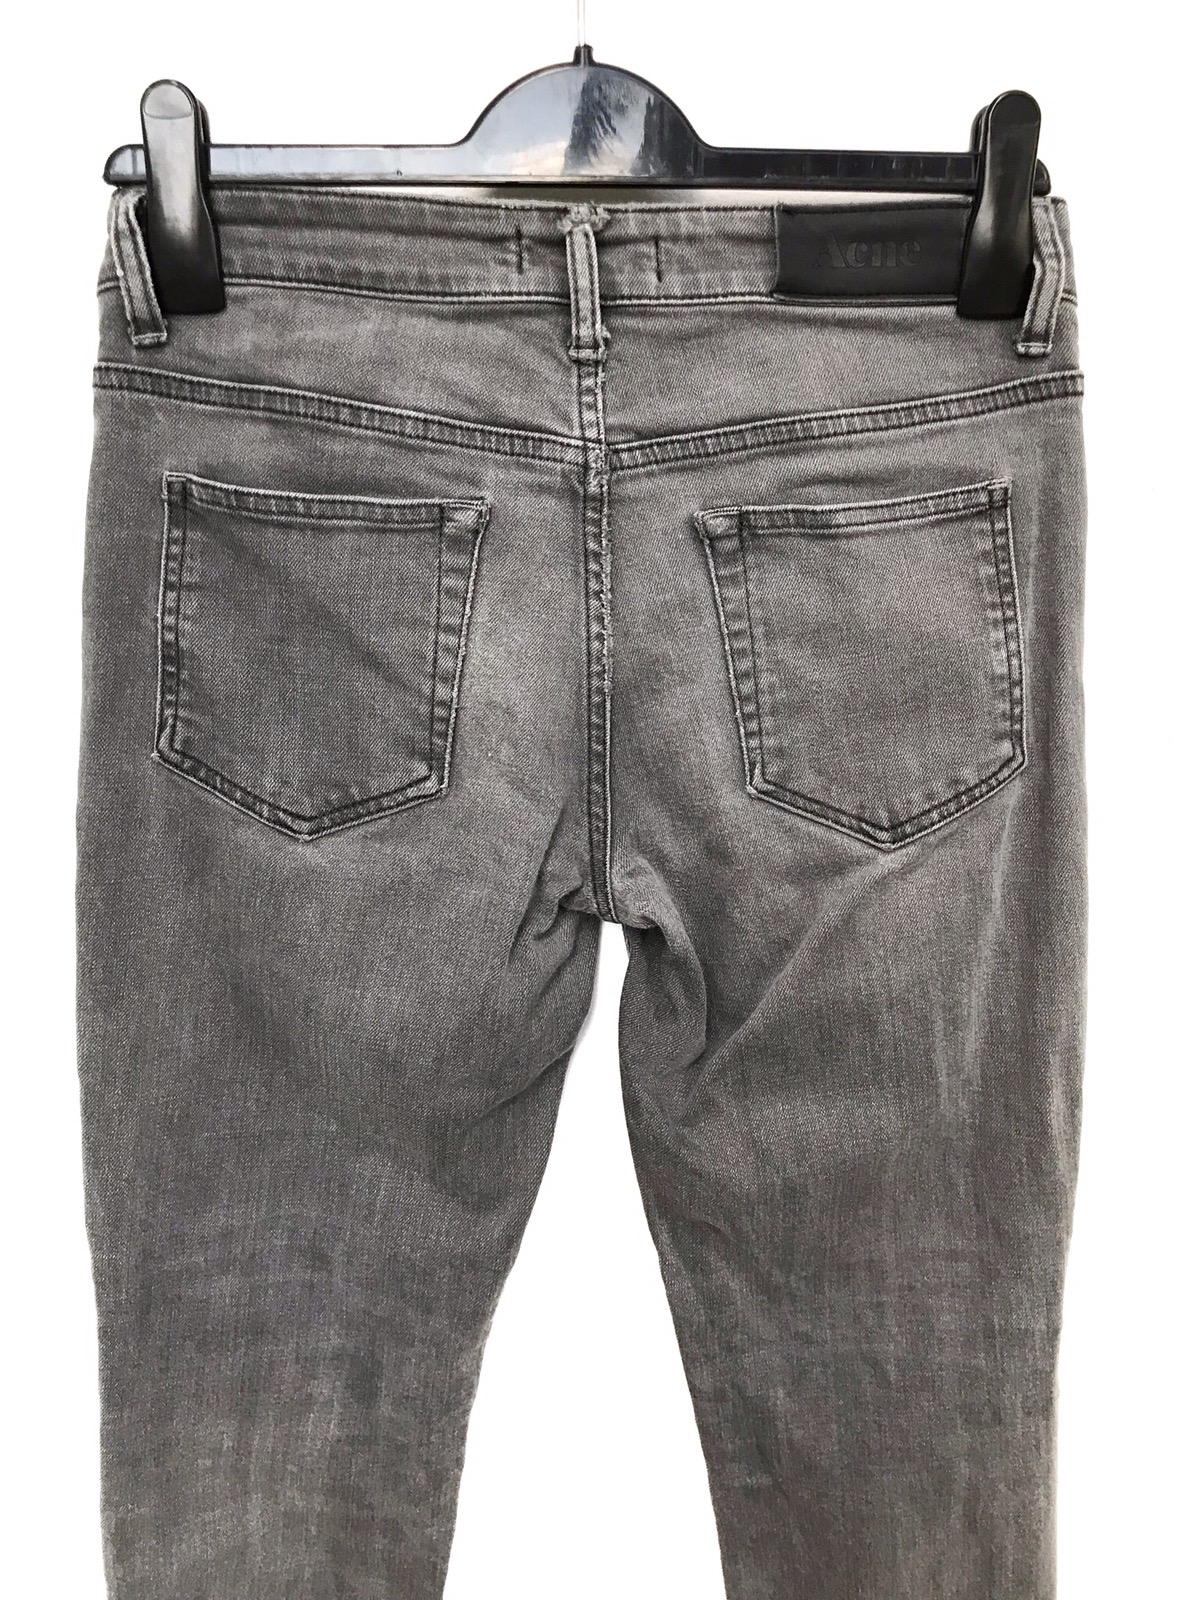 Acne Studios Distressed Skinny Jeans - 4